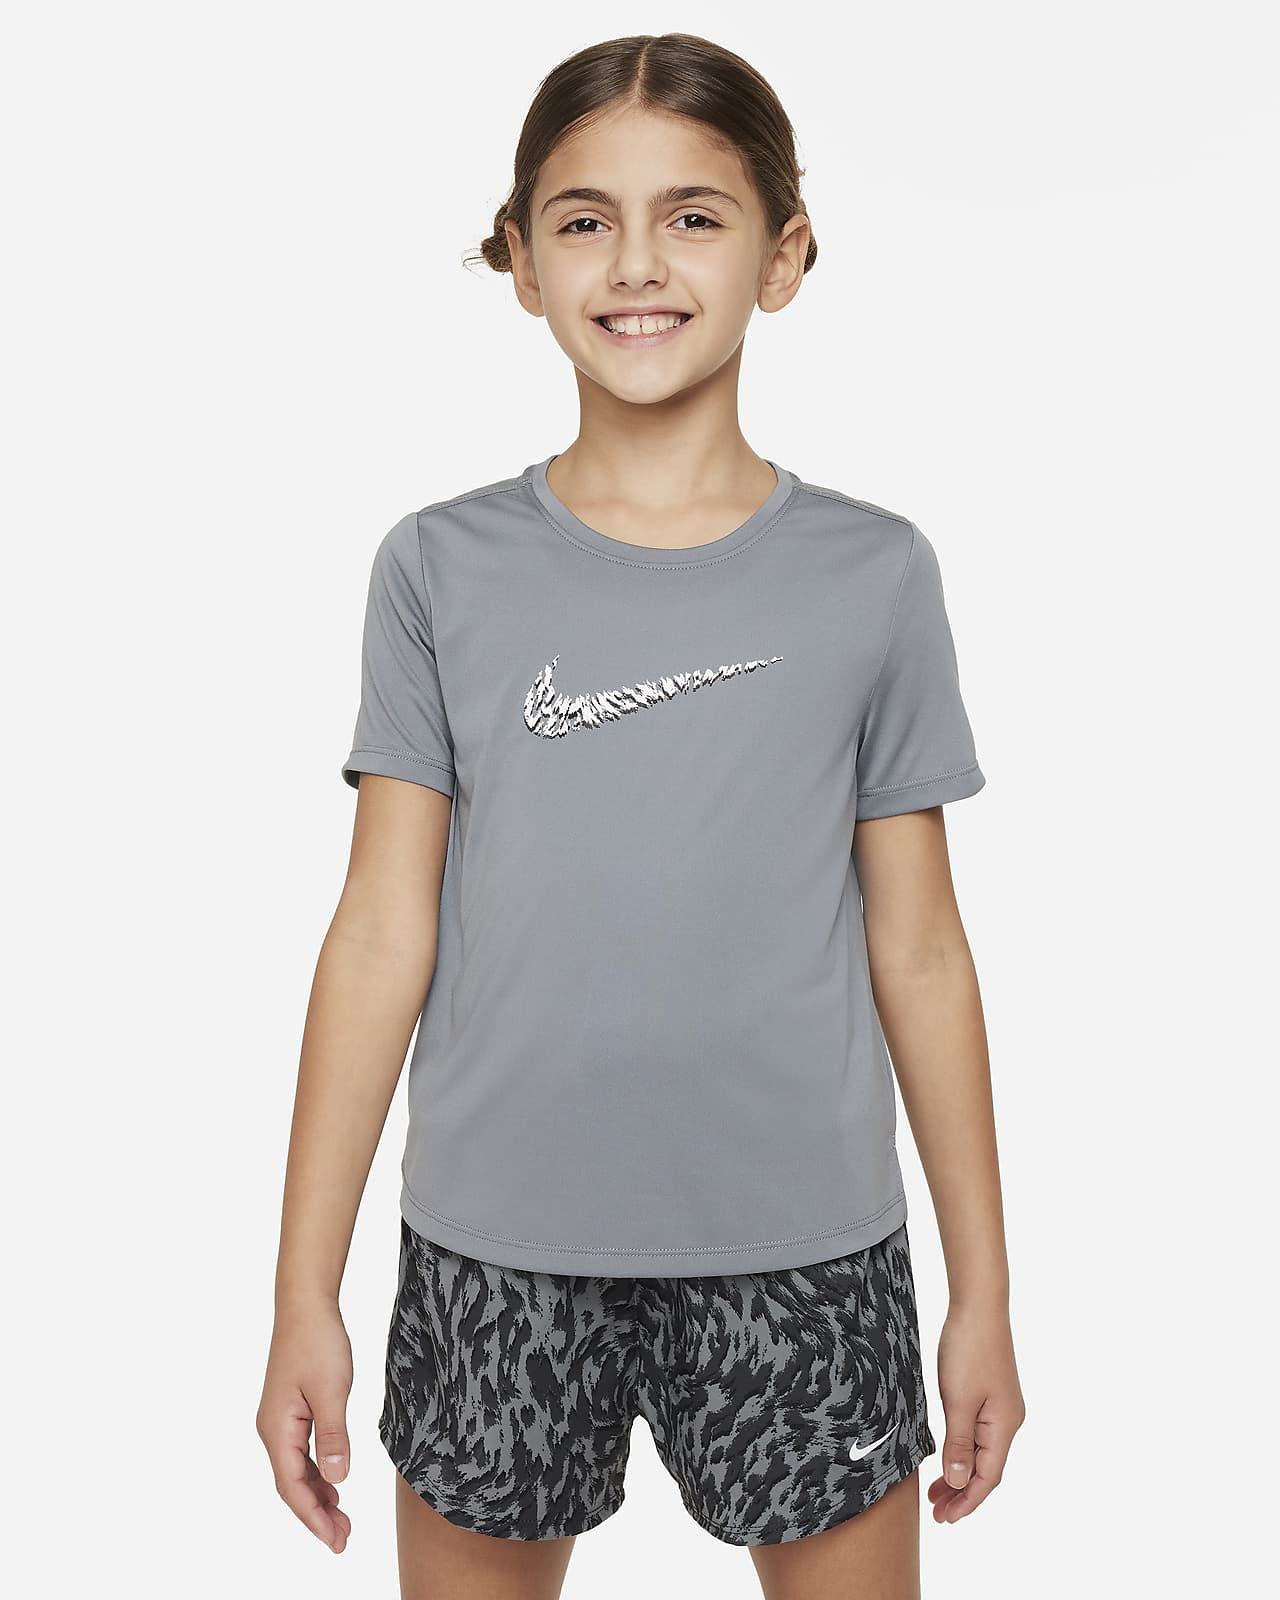 Nike One Older Kids' (Girls') Short-Sleeve Training Top